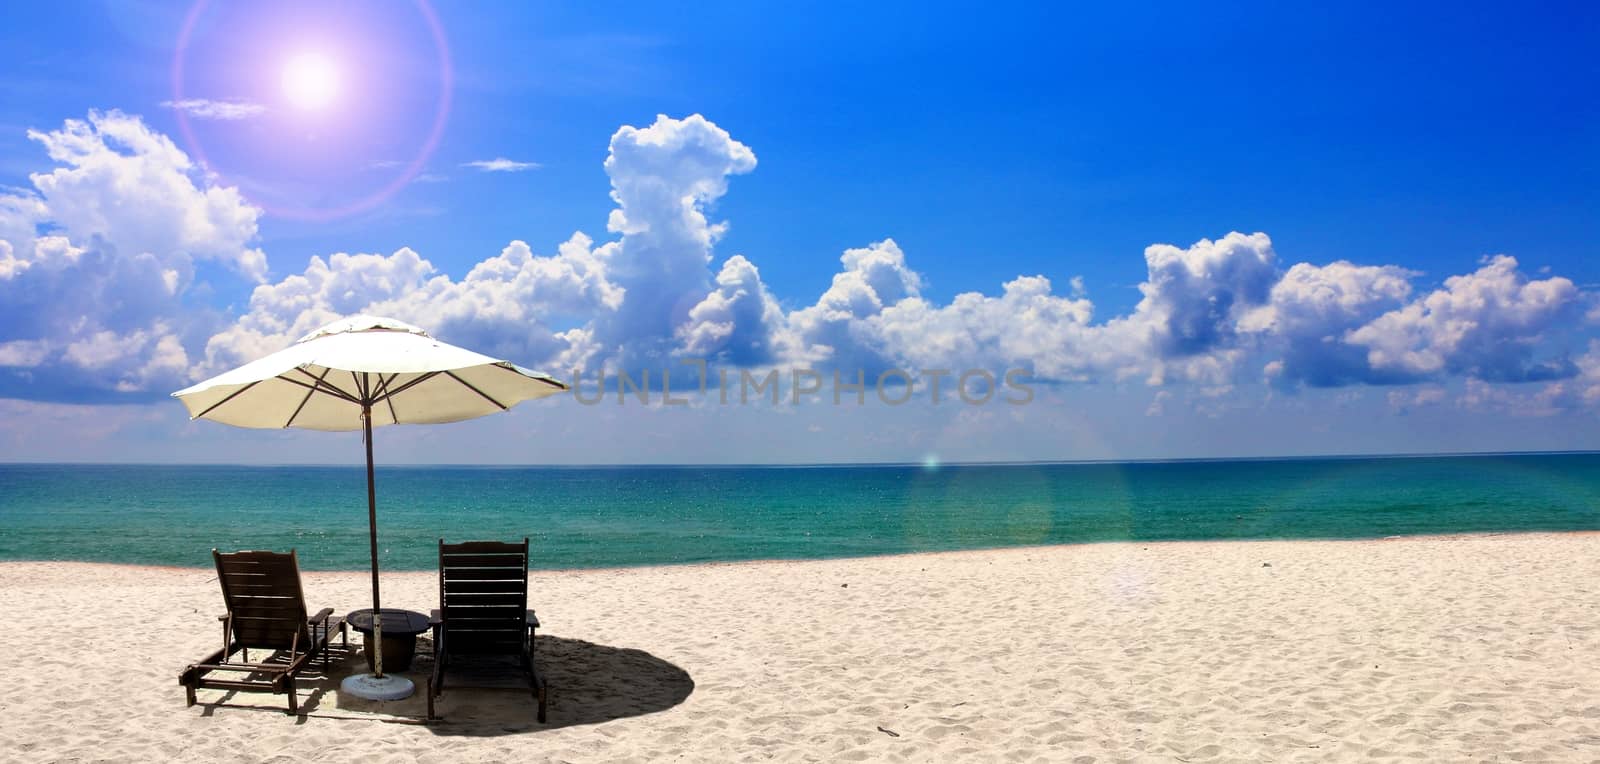 Beach chair and umbrella near the beach with blue sky by razihusin